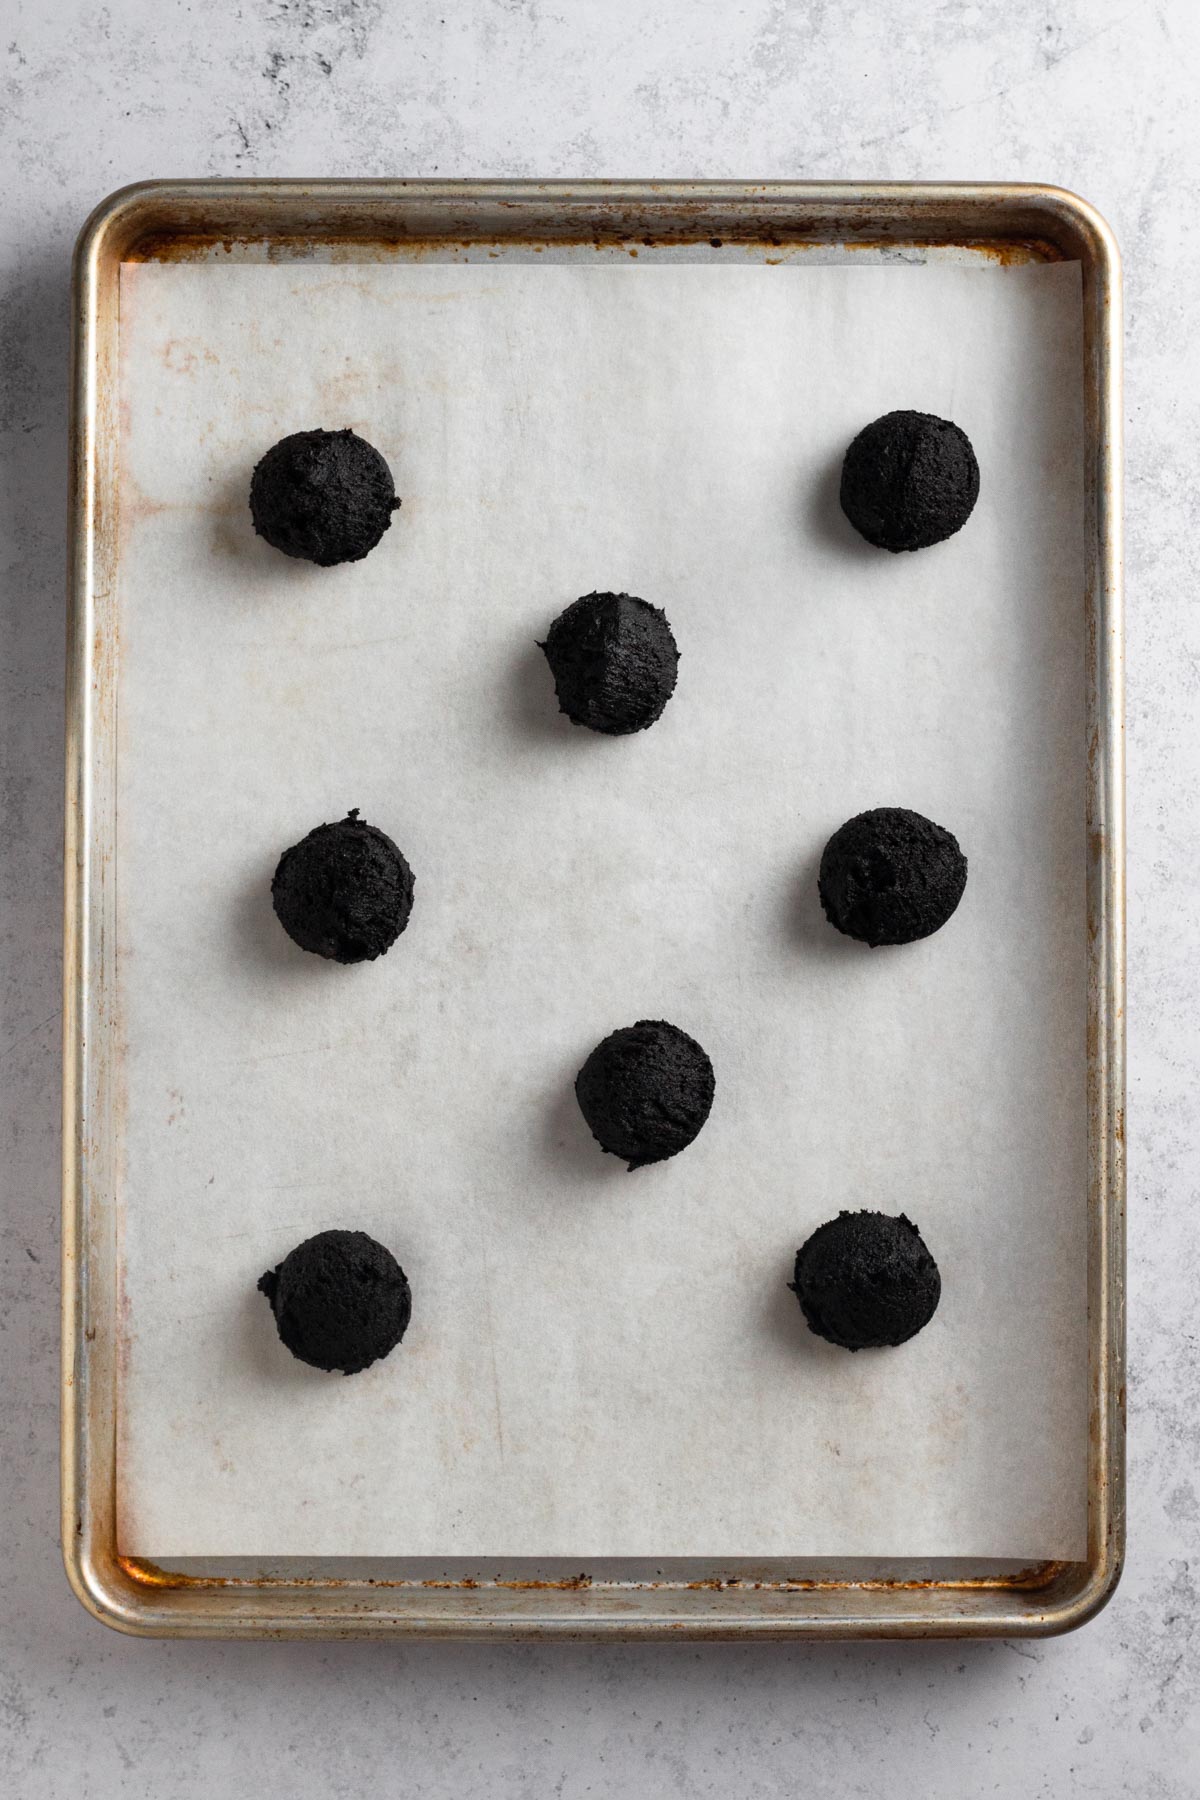 Overhead view of cookie dough balls on a baking sheet.